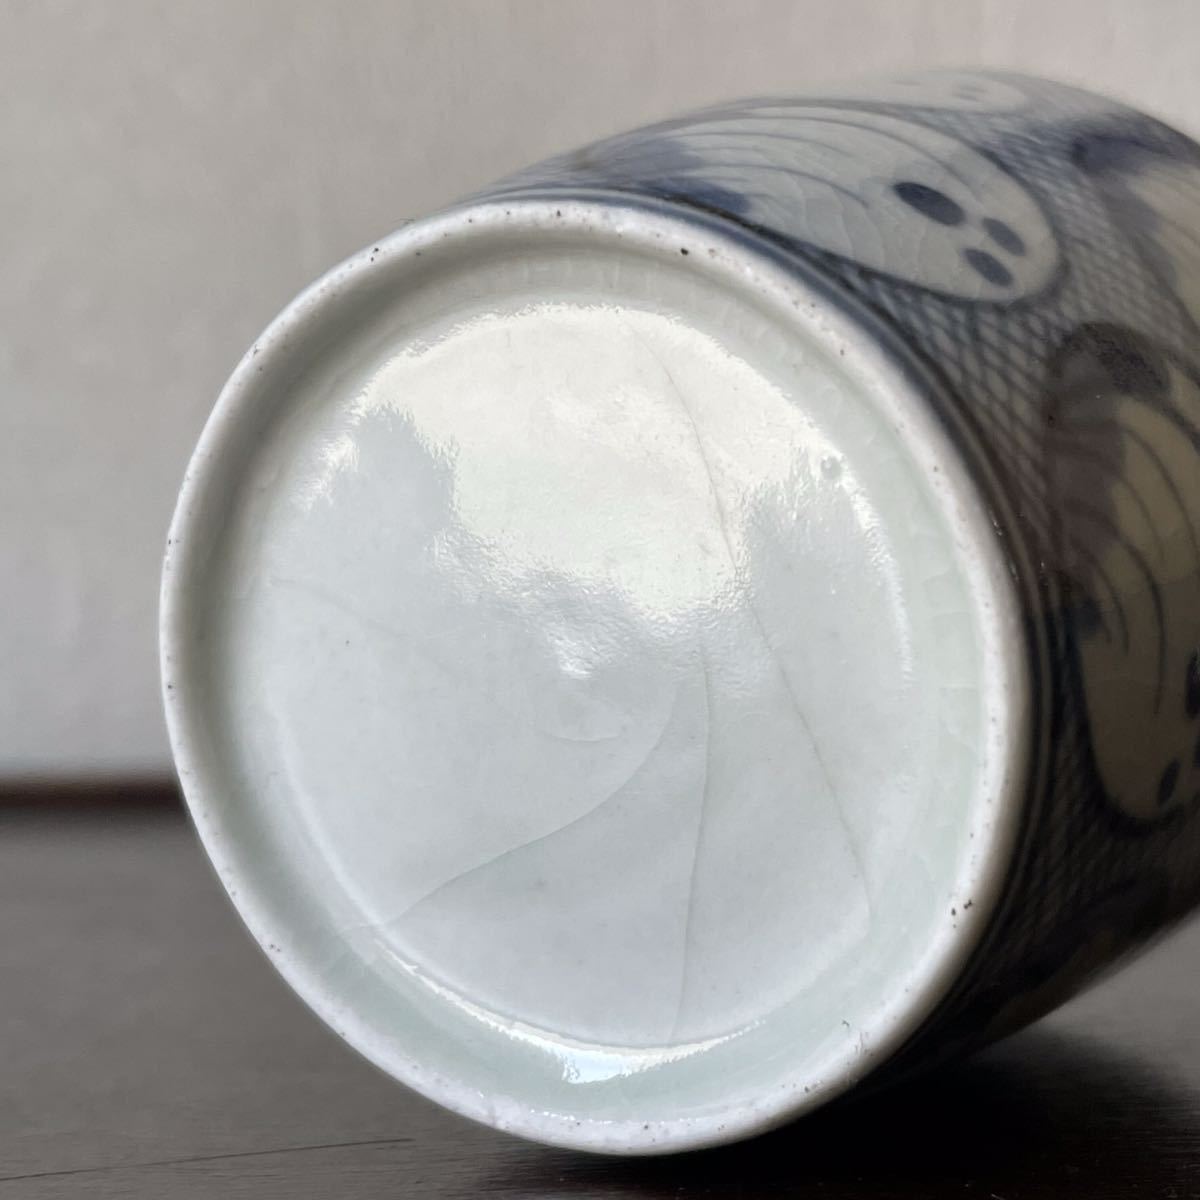  белый фарфор с синим рисунком .. круг документ соба чашка саке посуда для сакэ * старый Imari * Edo времена средний период 